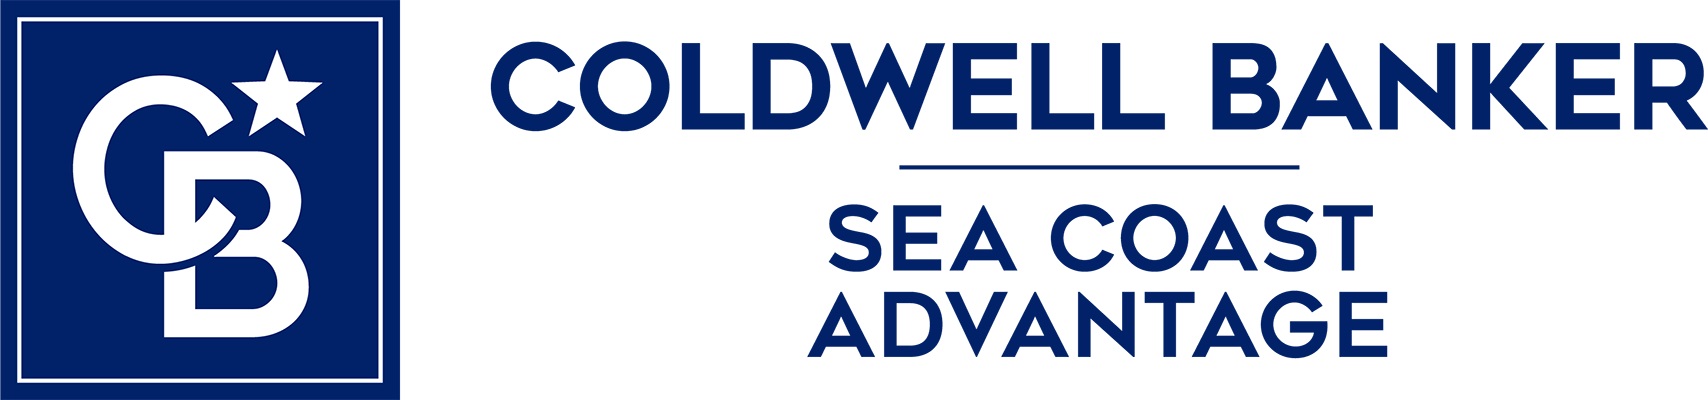 Margaret Smith - Coldwell Banker Sea Coast Advantage Realty Logo